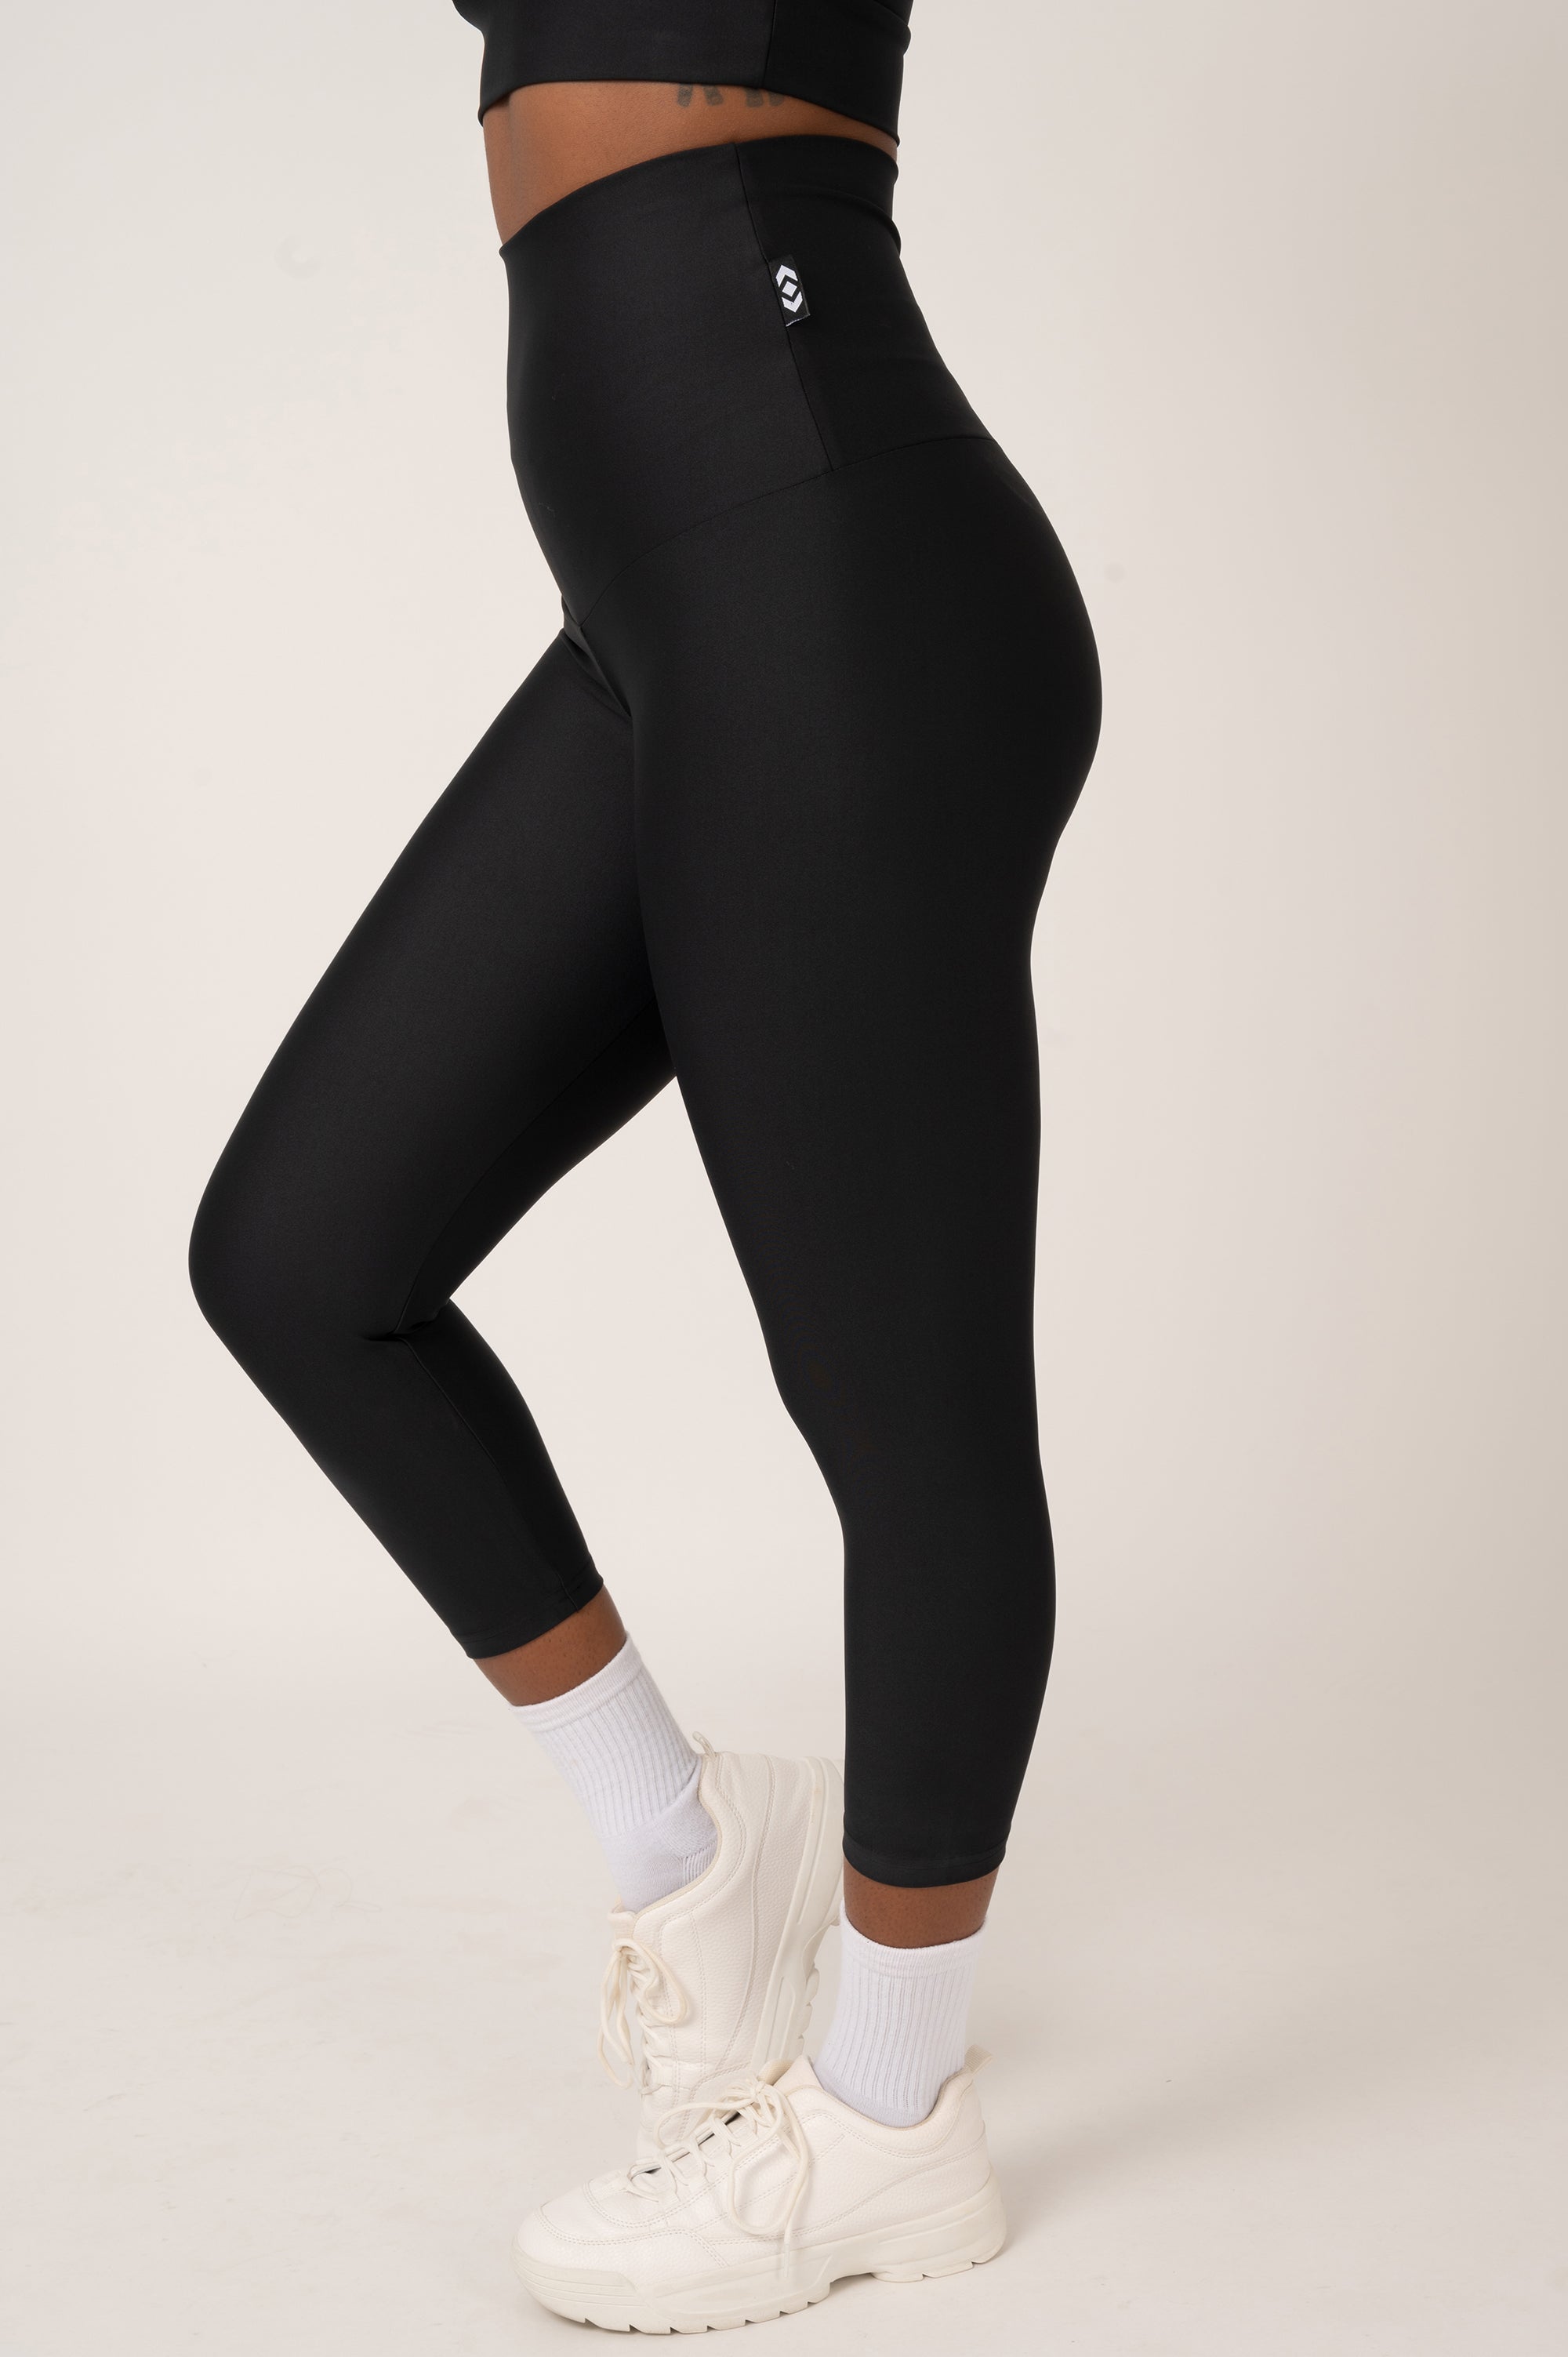 ESPİNA Women's Plus Size High Waist Stretchy Short Capri Tights